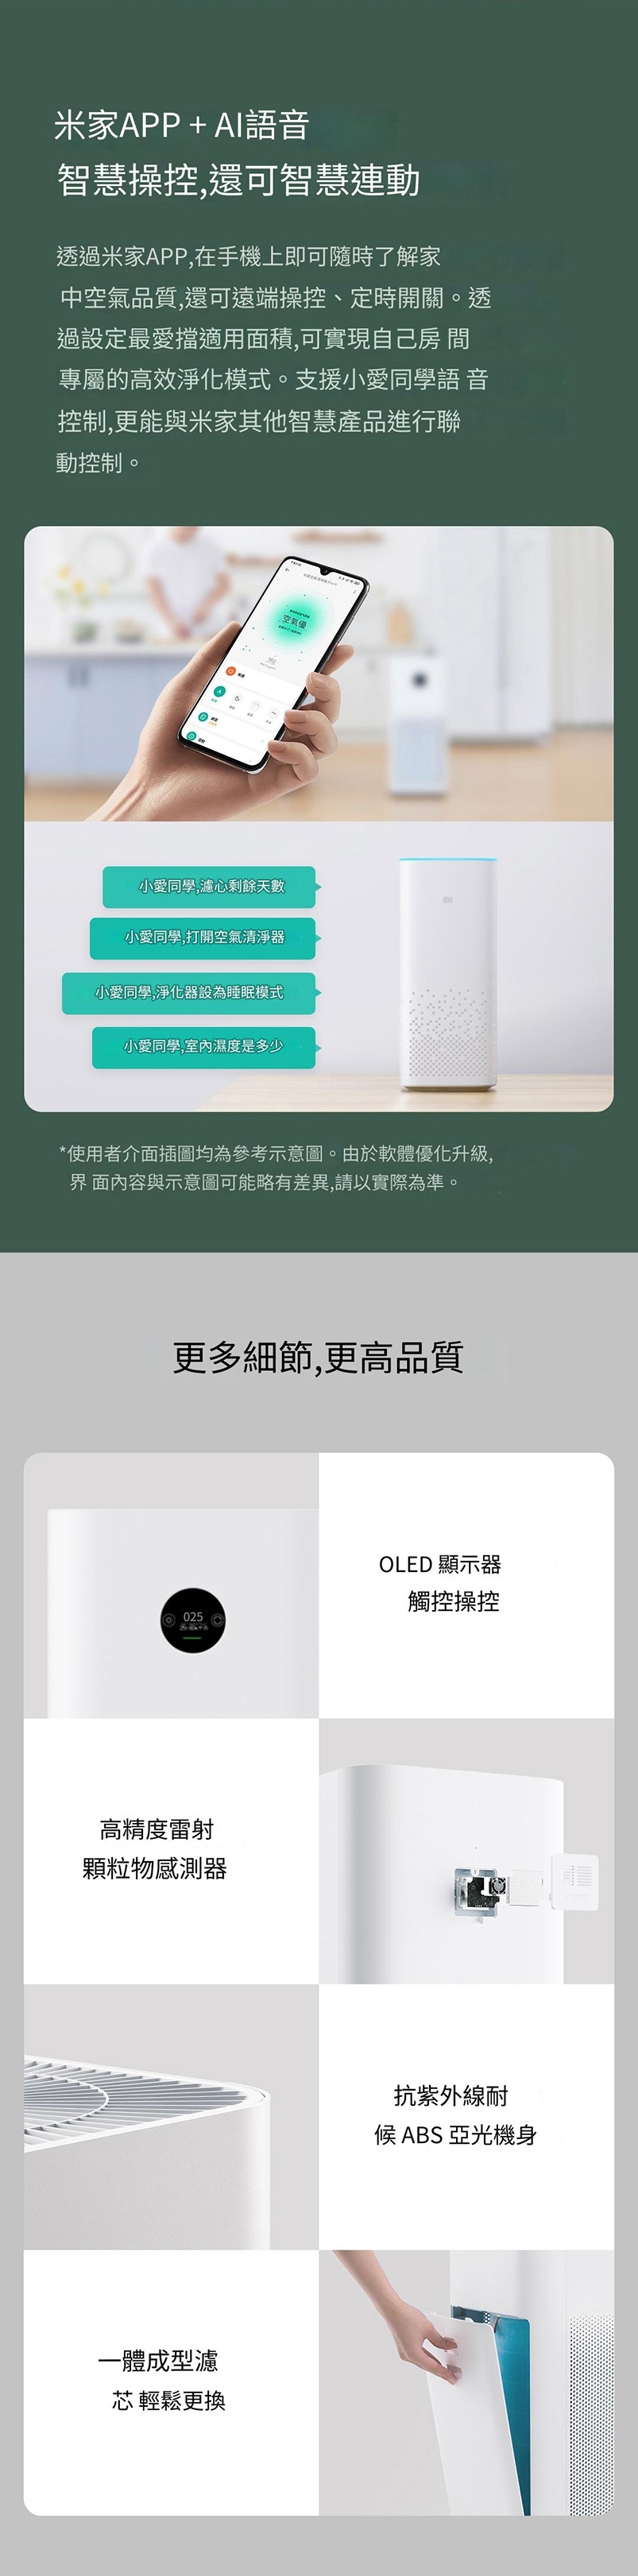 Xiaomi Smart Air Purifier Pro H